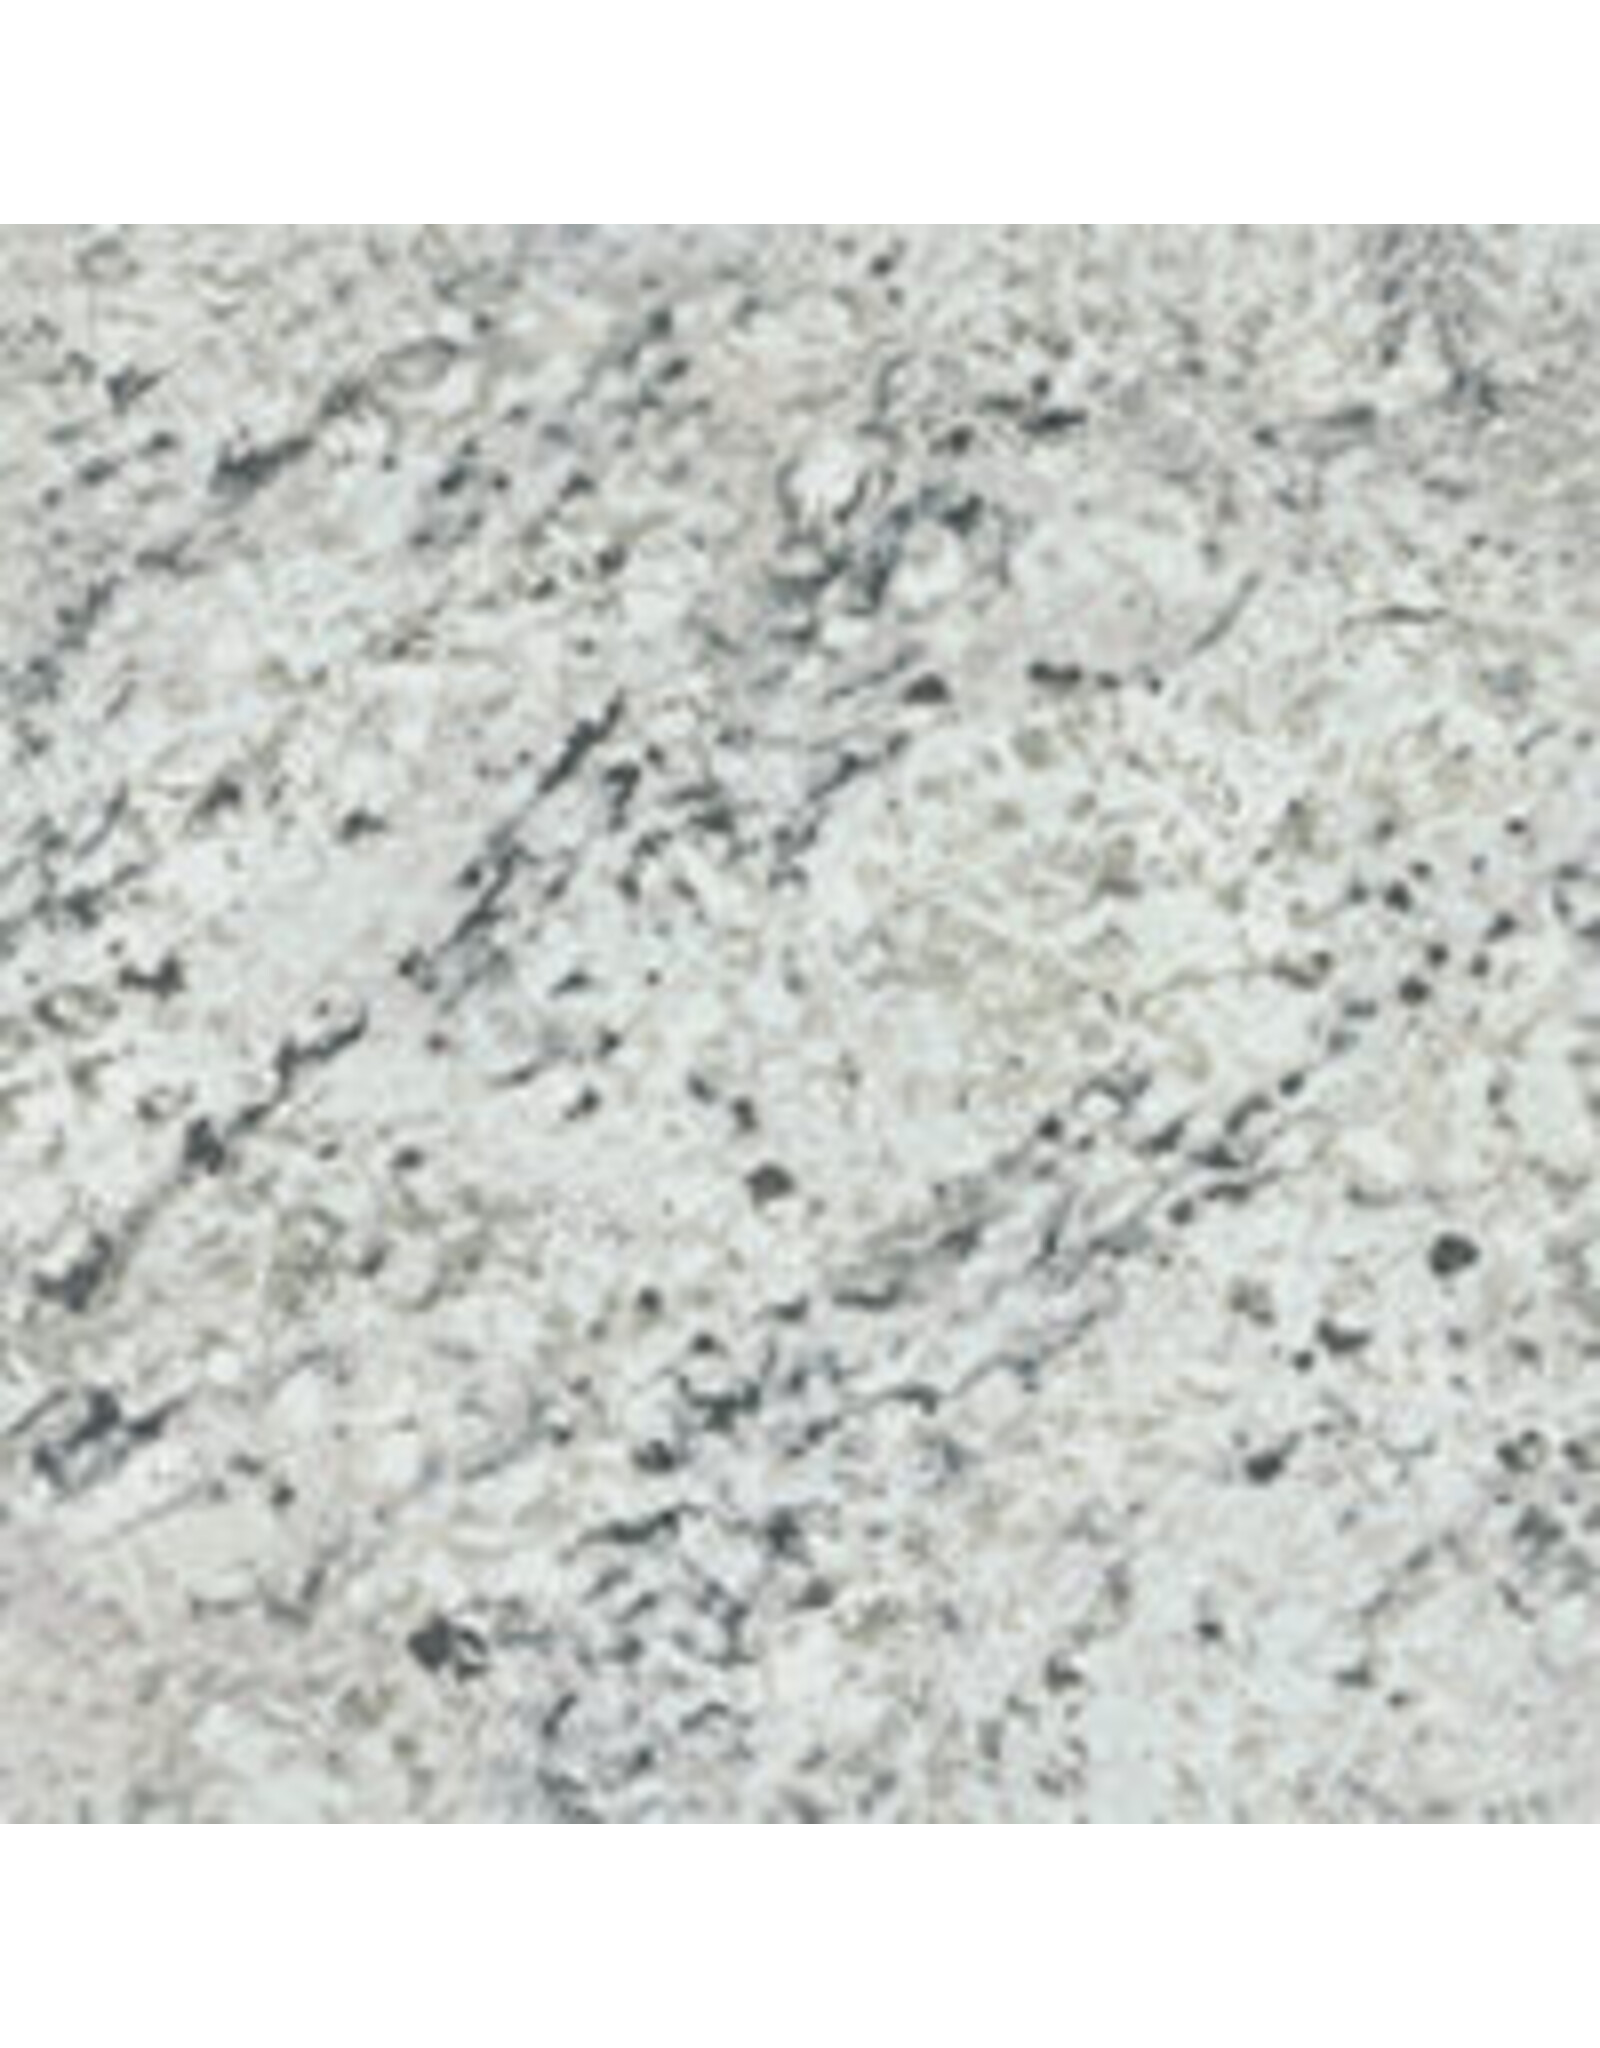 HKC Laminate Countertop 9476-43 White Ice Granite 25.25x72 (6ft)